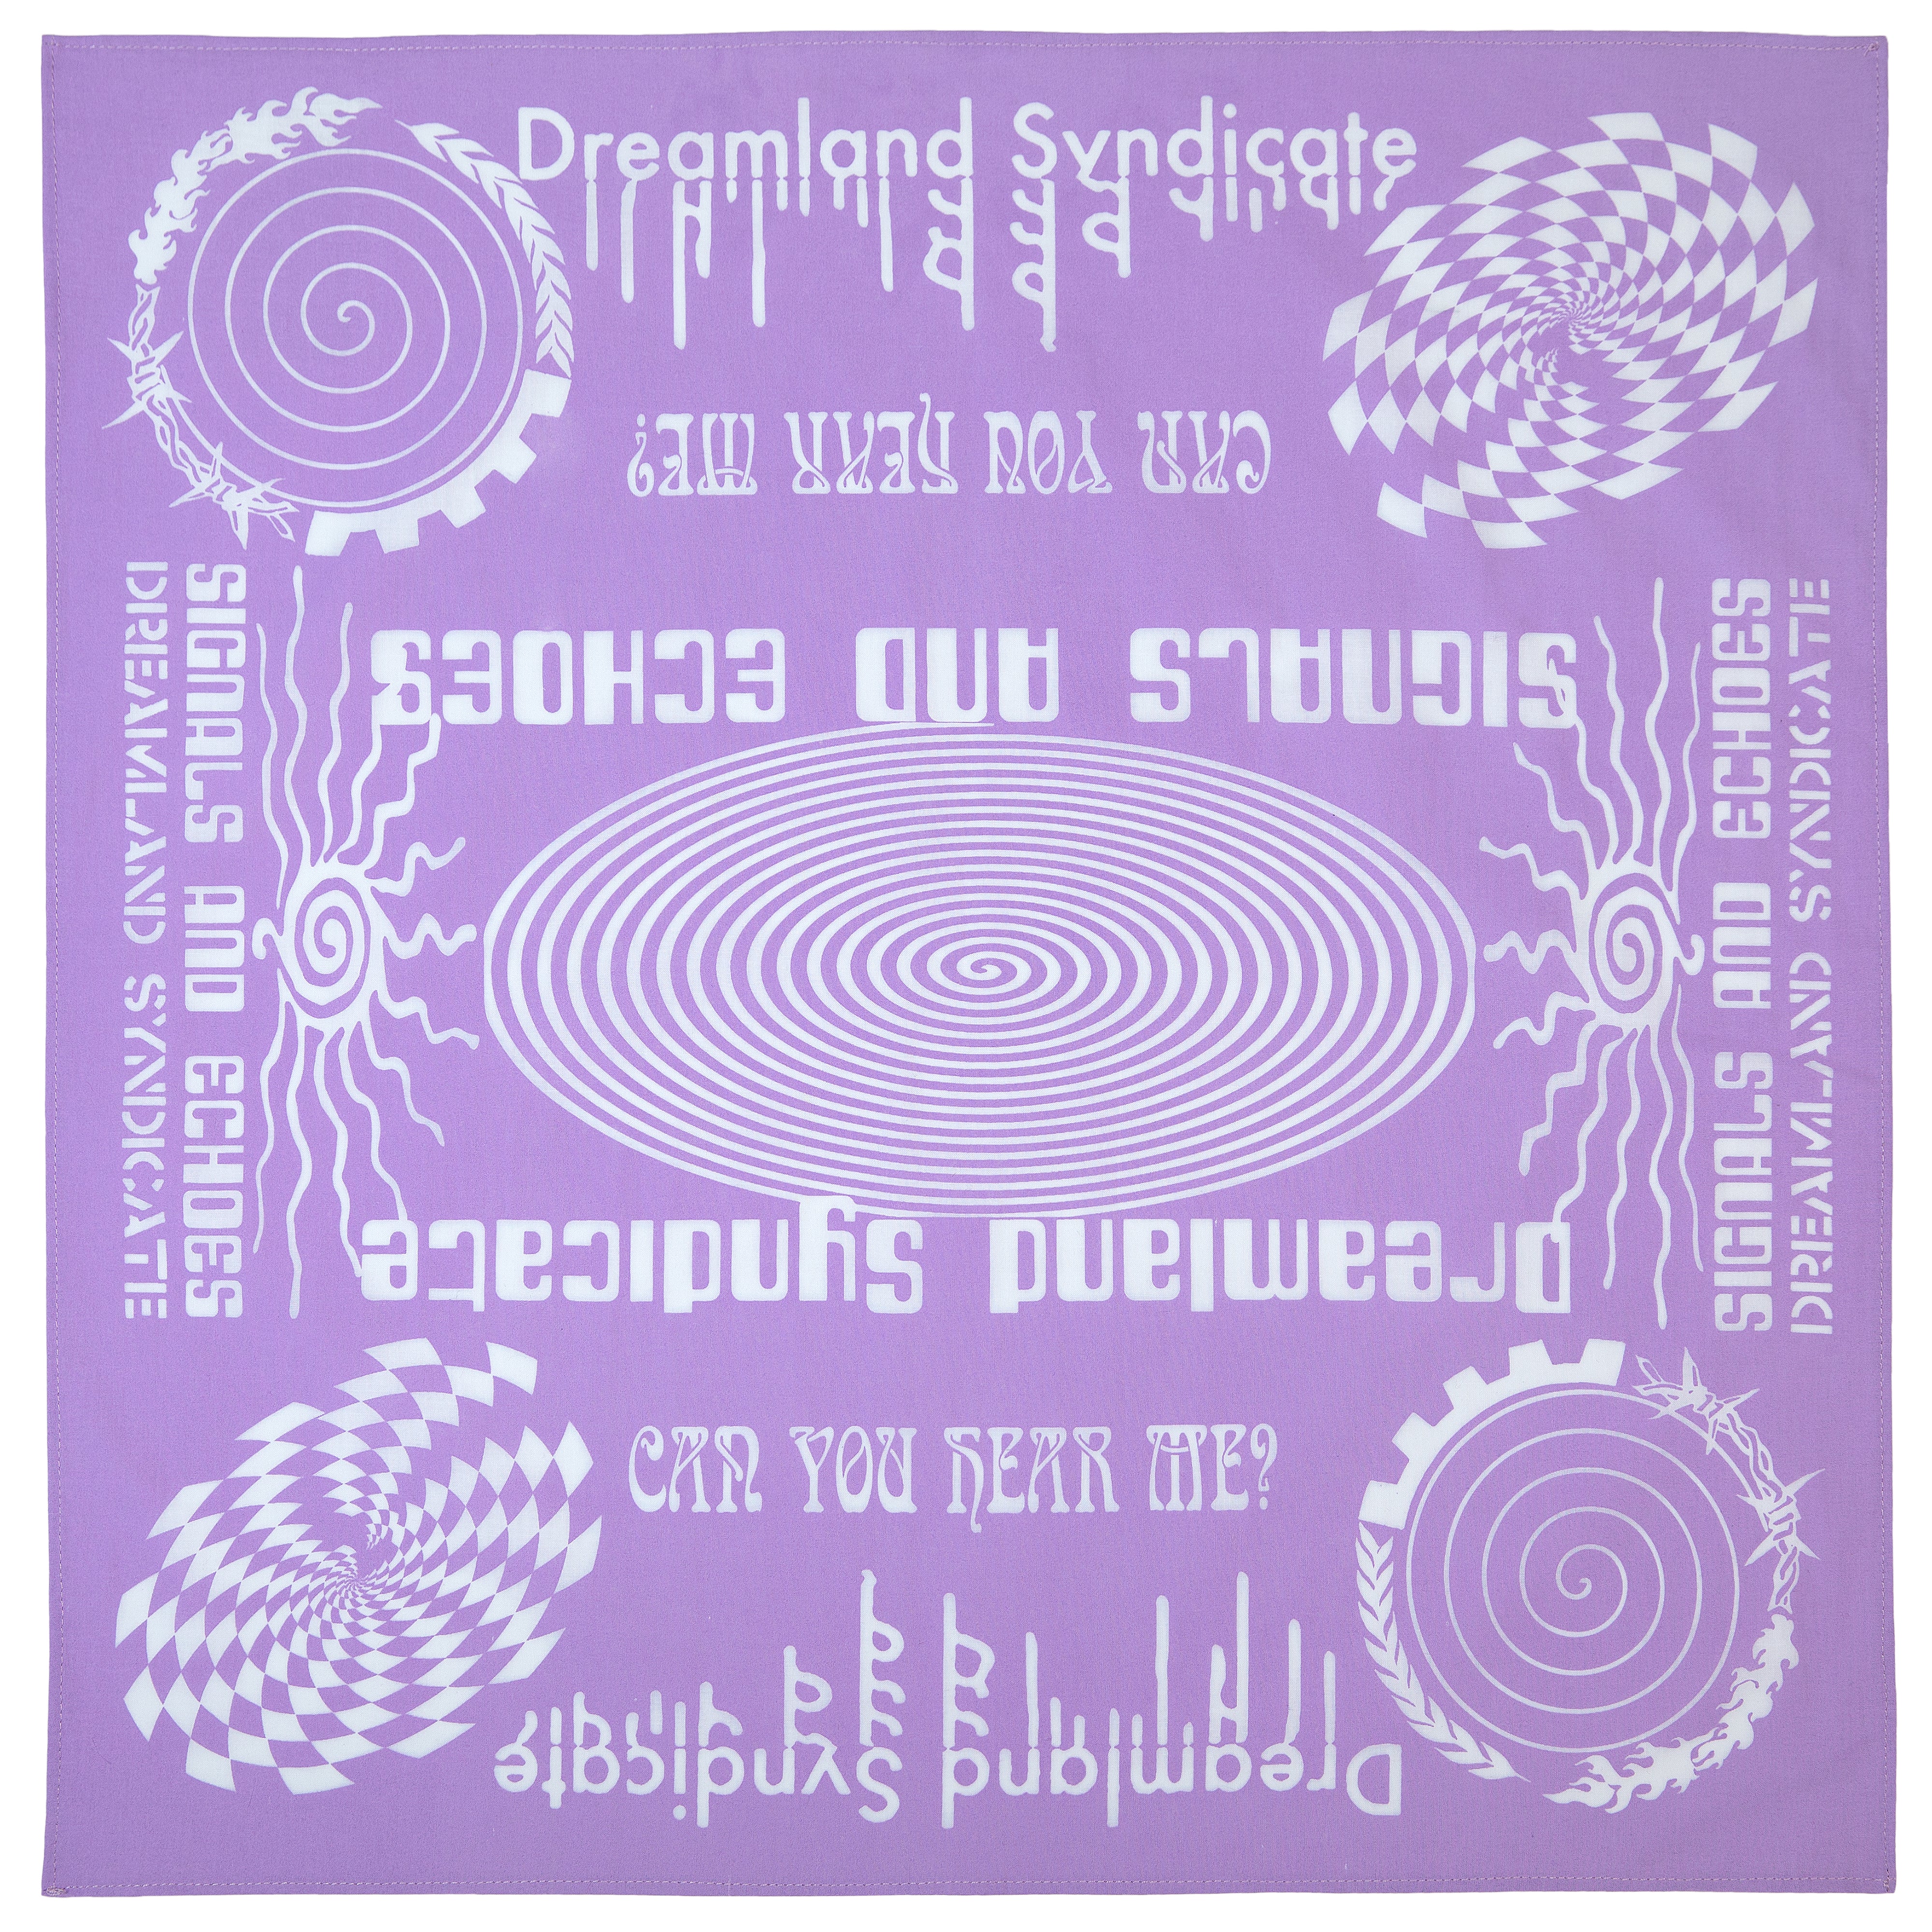 Signals Bandana - Dreamland Syndicate